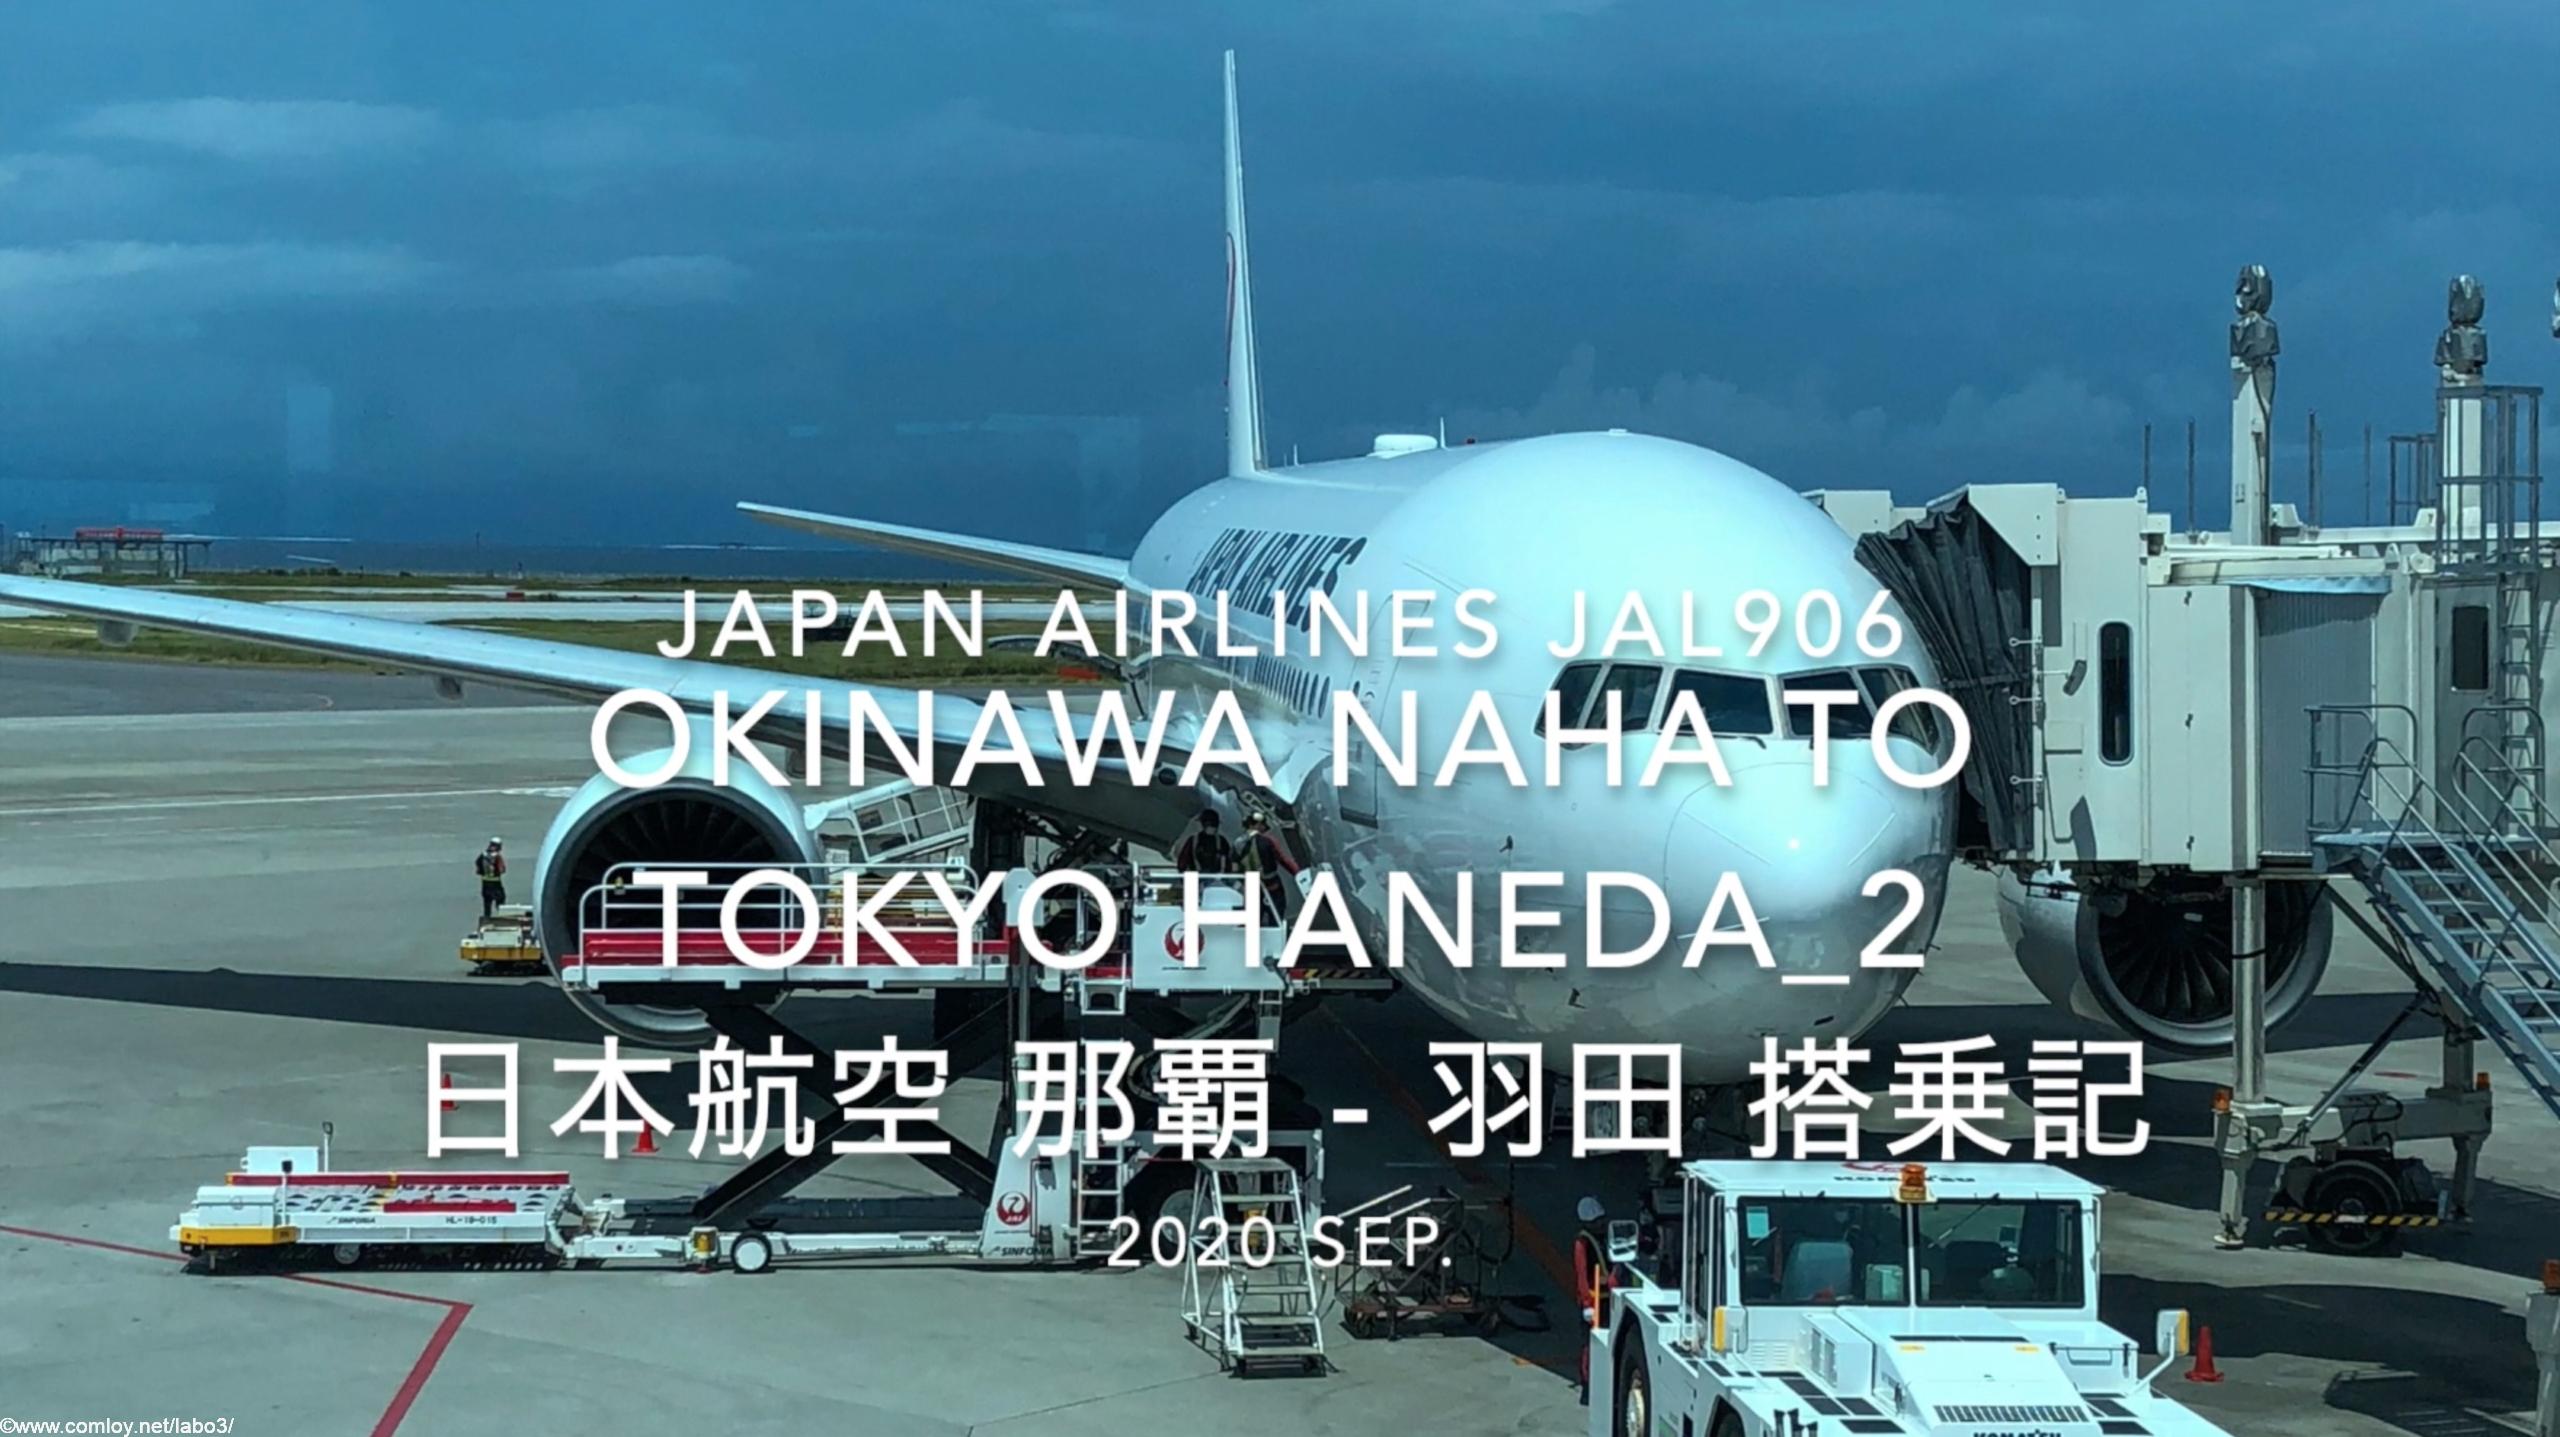 【Flight Report】2020 Sep Japan Airlines JAL906 OKINAWA NAHA TO HANEDA_2 日本航空 那覇 - 羽田 搭乗記